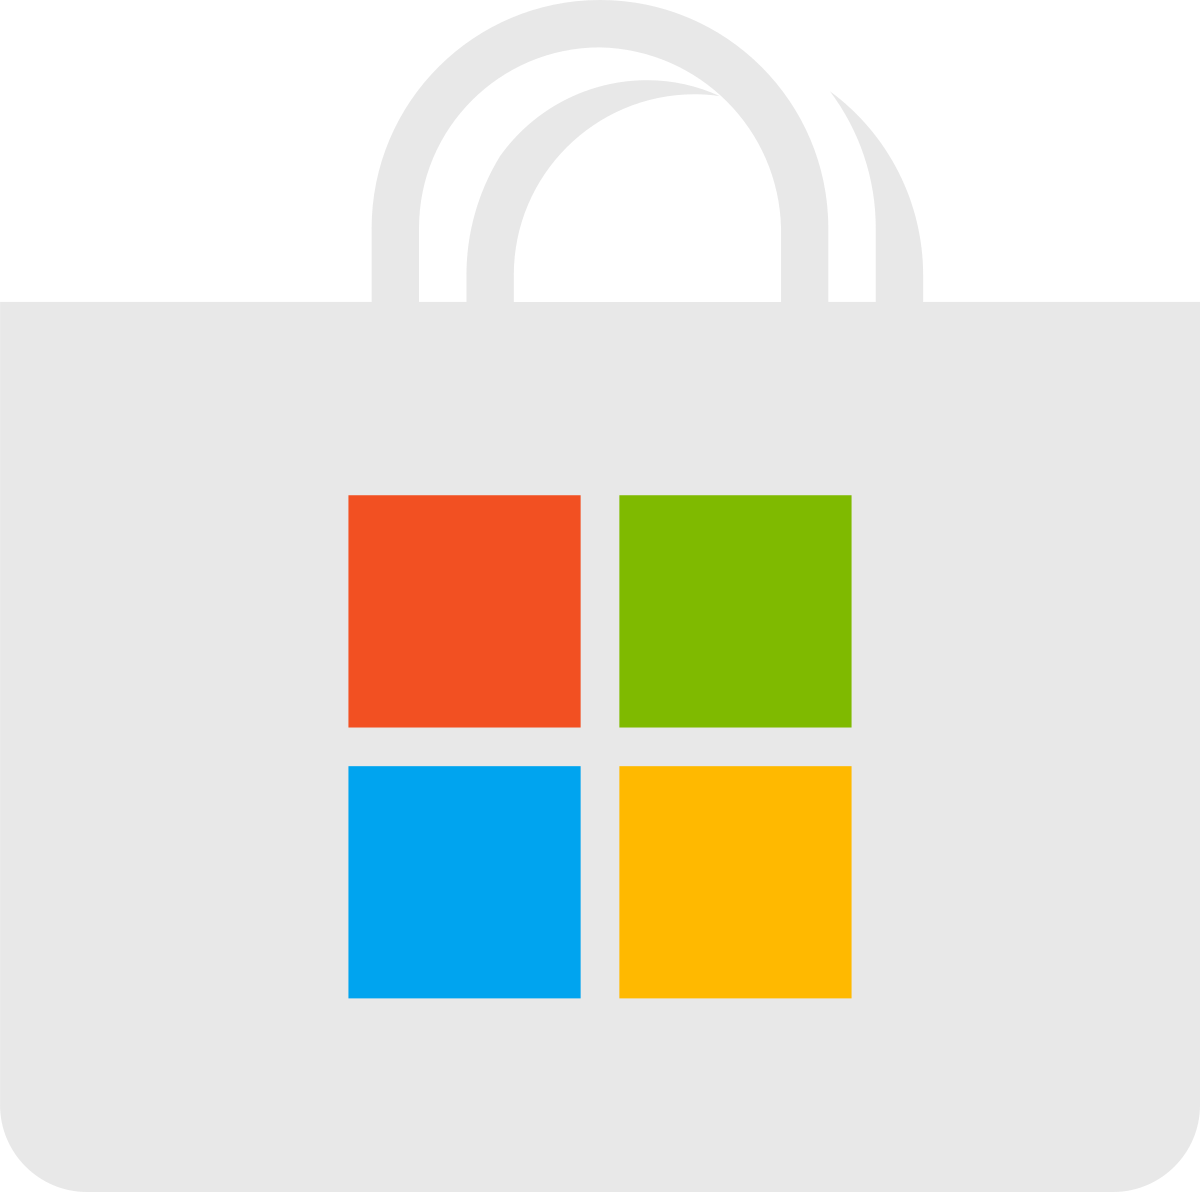 Microsoft Software Store